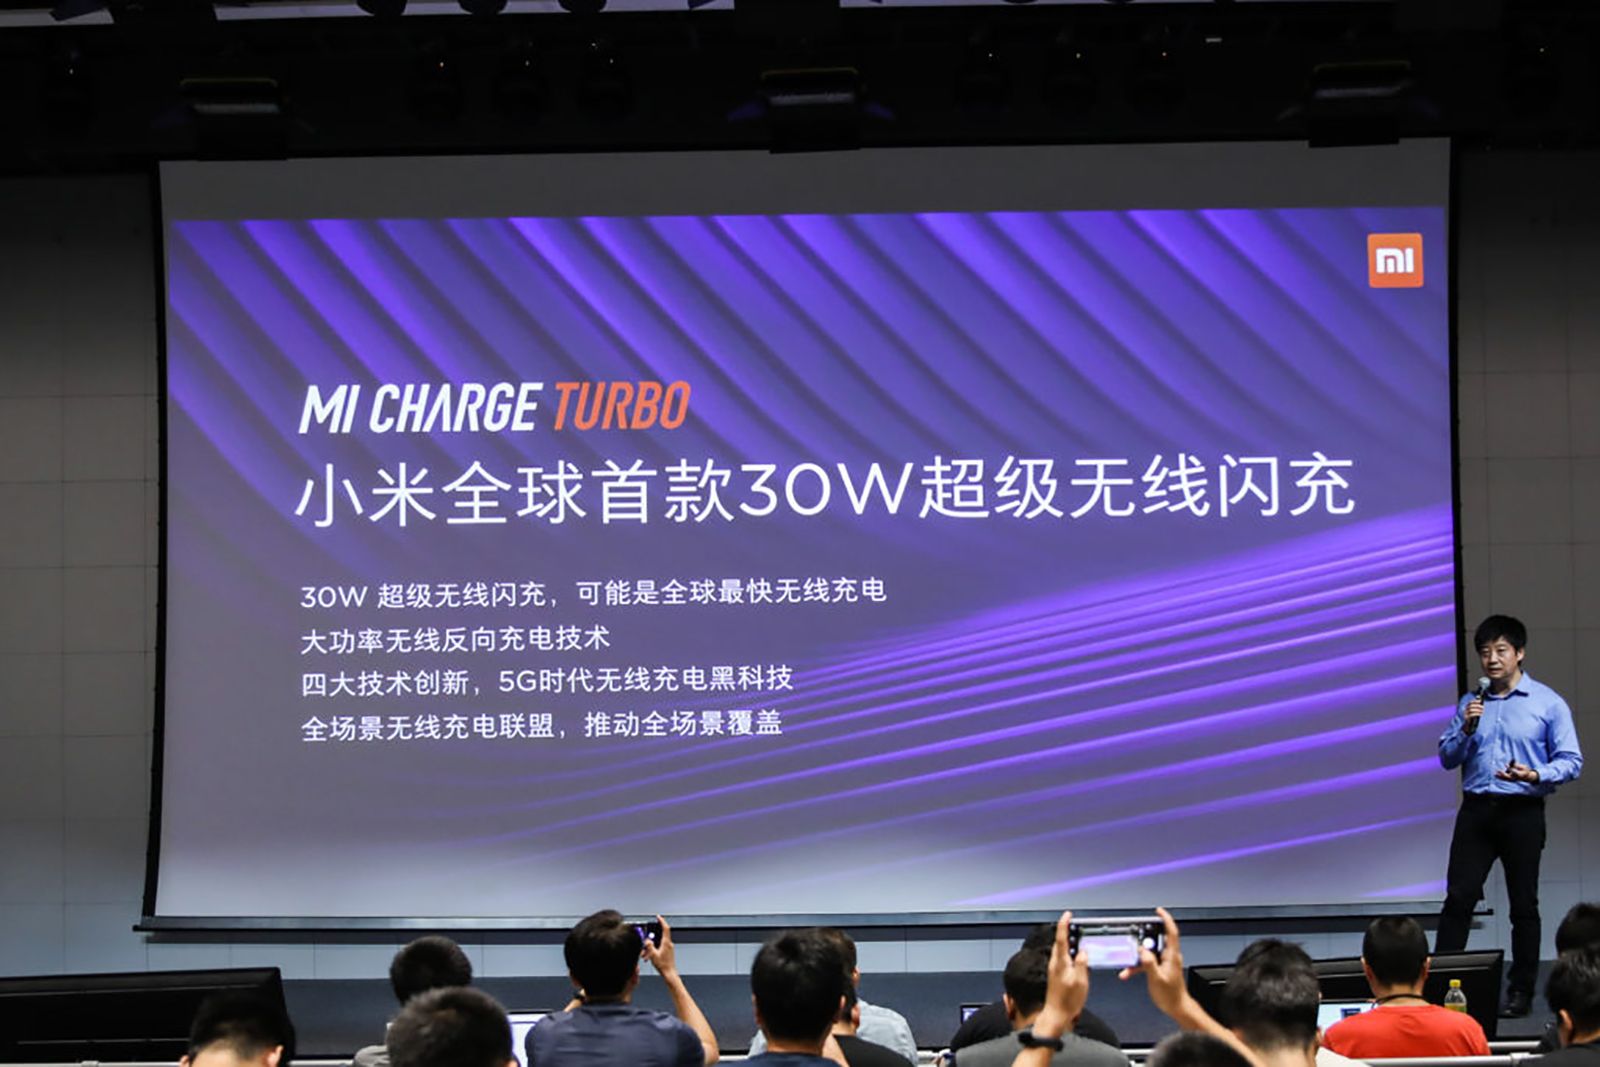 Xiaomi Reveals Mi Charge Turbo 30w Fast Wireless Charging For Mi 9 Pro 5g image 1